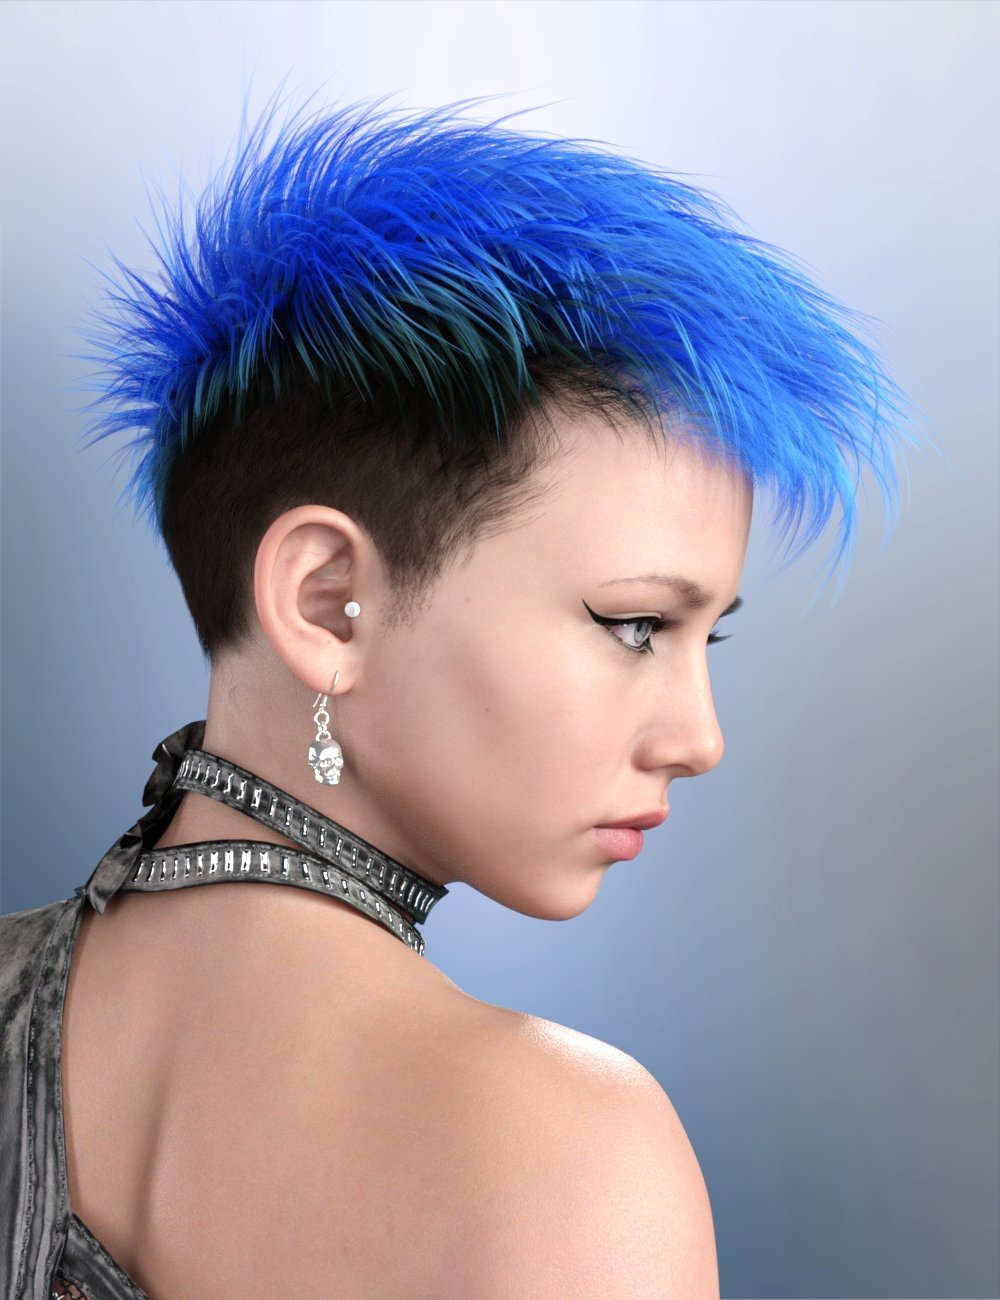 dForce Togatta Hair for Genesis 8 by: RedzStudio, 3D Models by Daz 3D